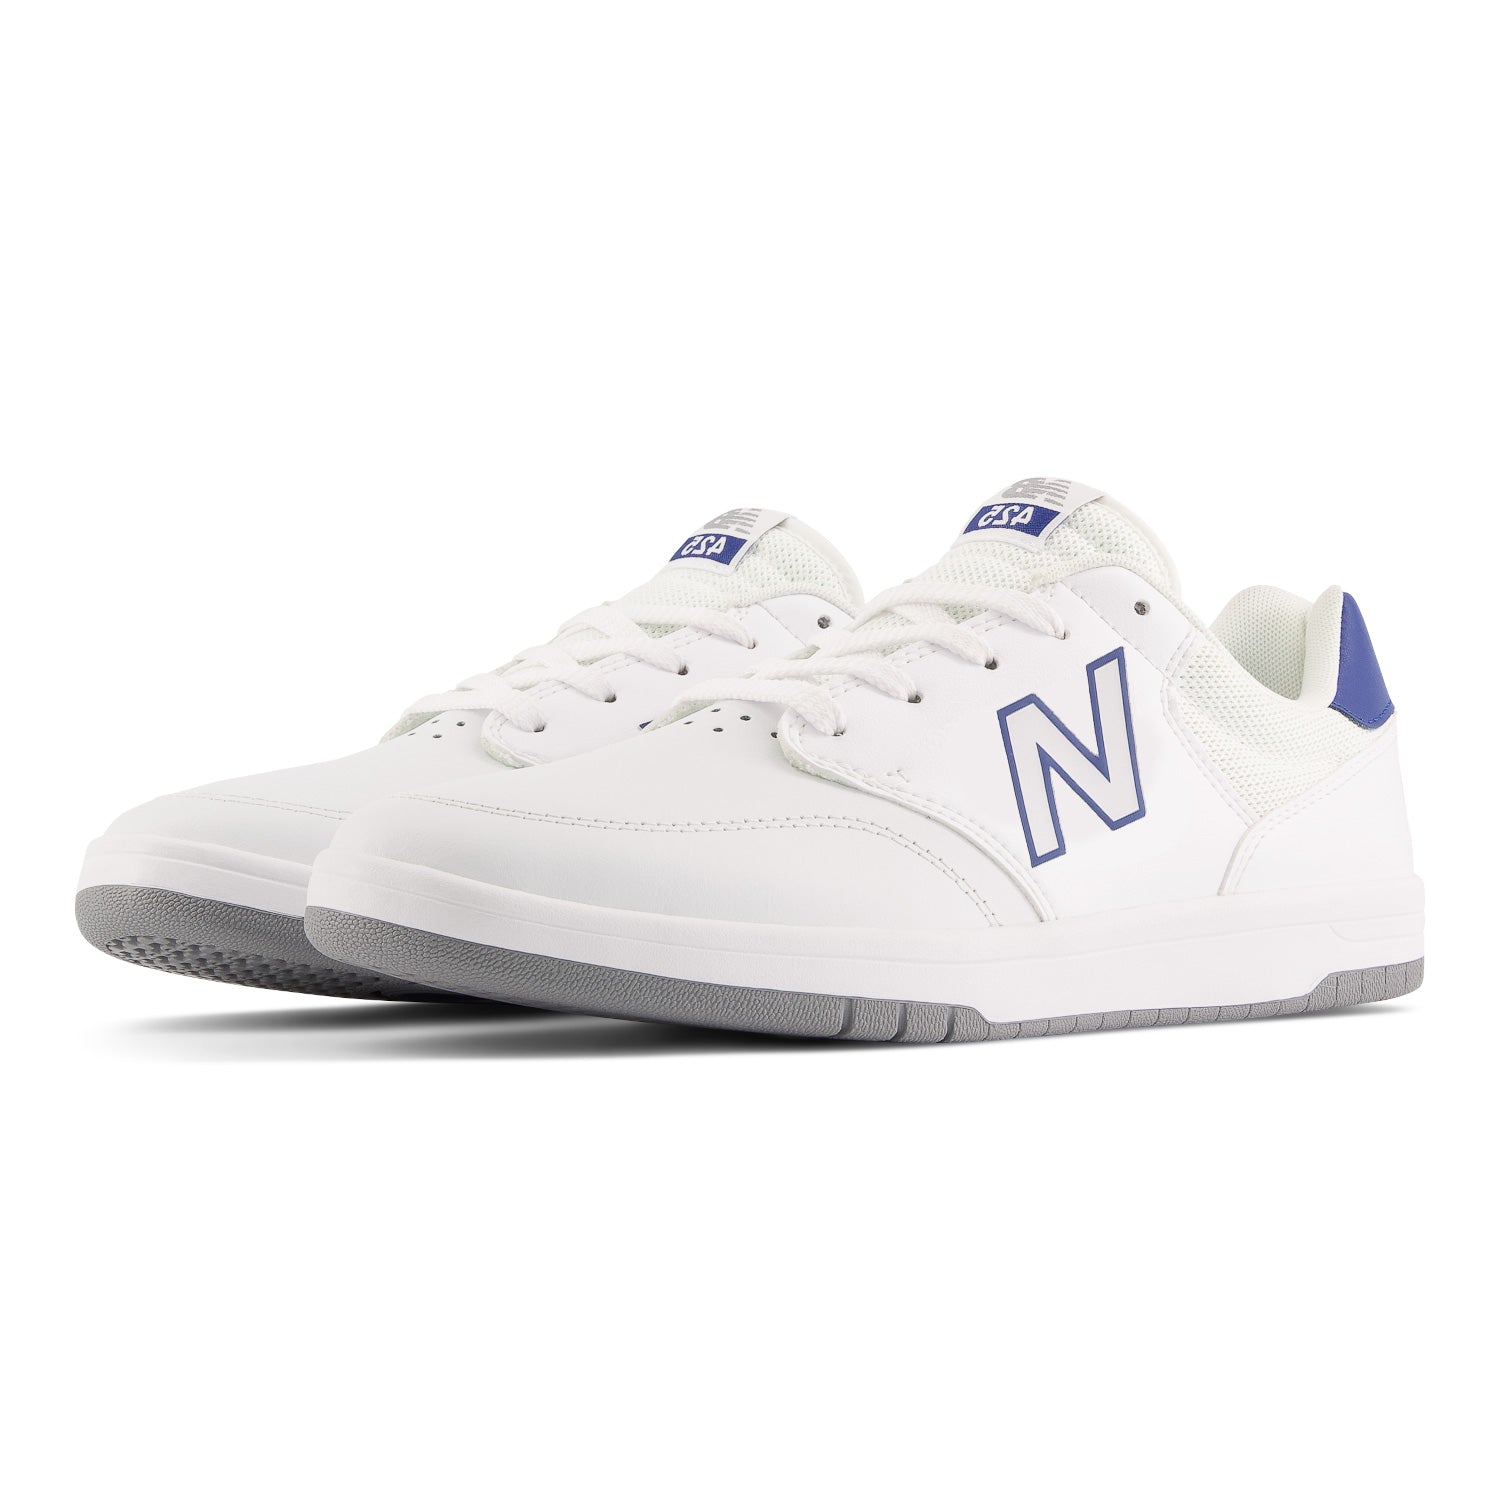 New Balance Numeric NM425 - White/Royal